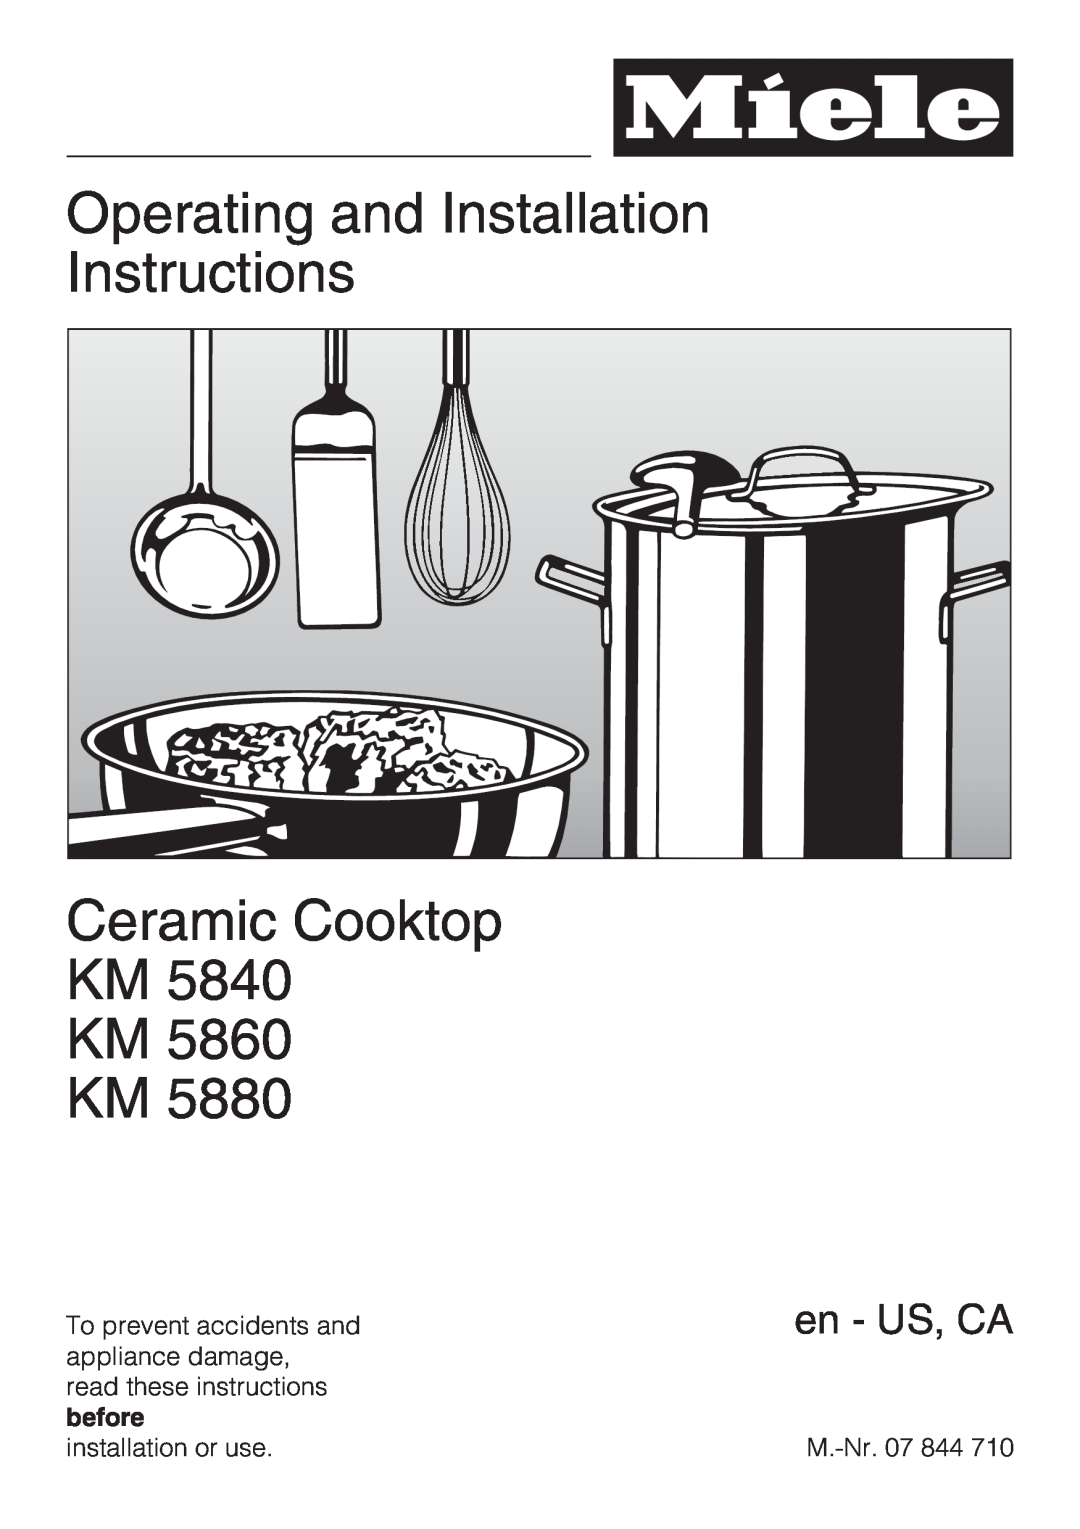 Miele KM 5880 installation instructions Operating and Installation Instructions, Ceramic Cooktop KM KM KM, en - US, CA 